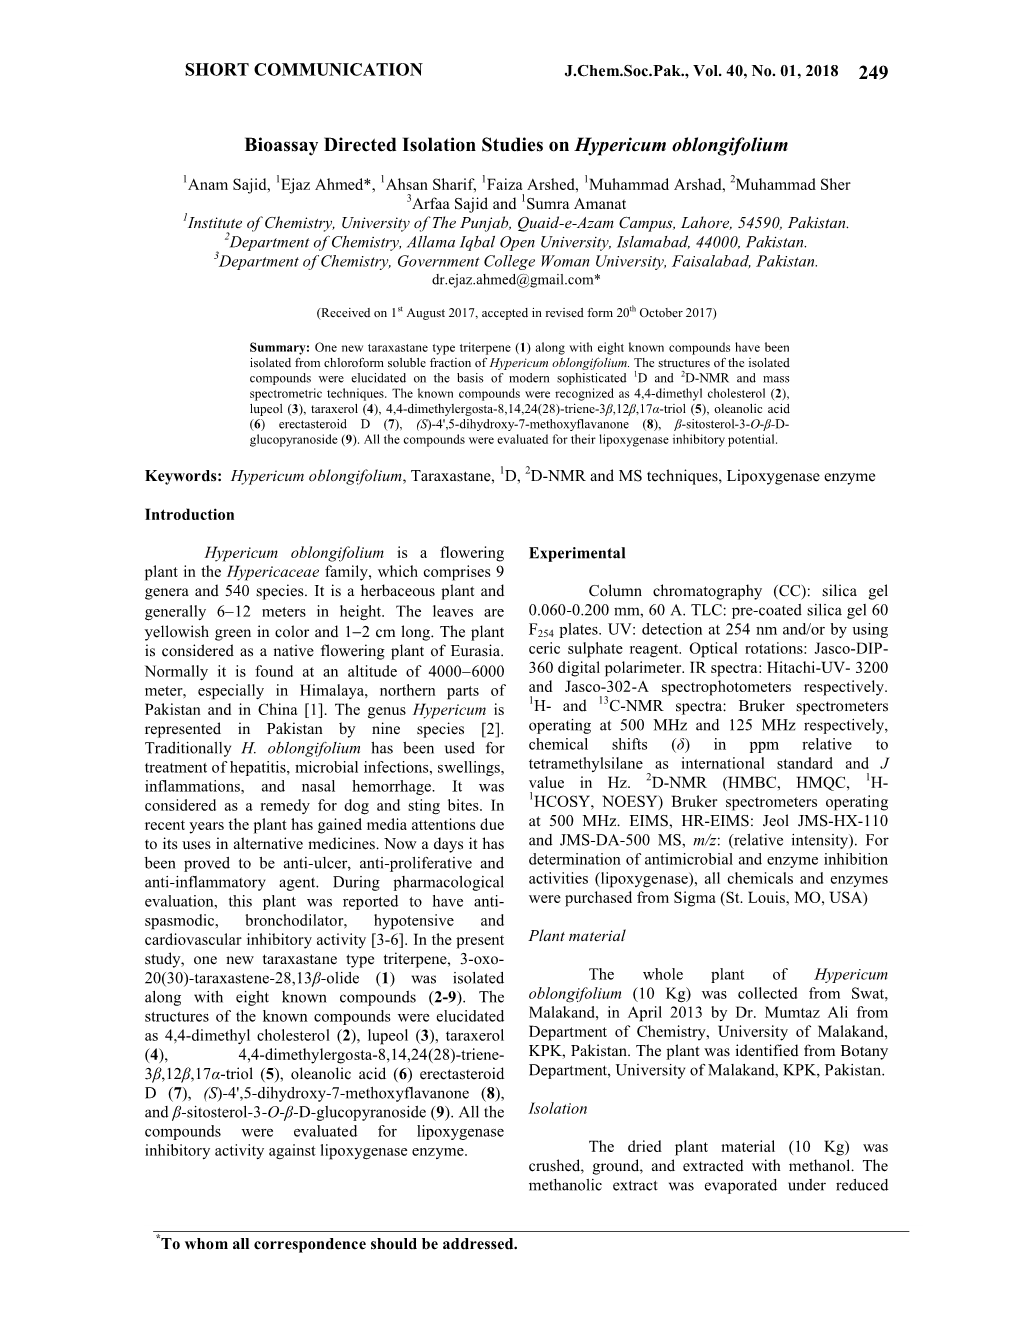 Bioassay Directed Isolation Studies on Hypericum Oblongifolium